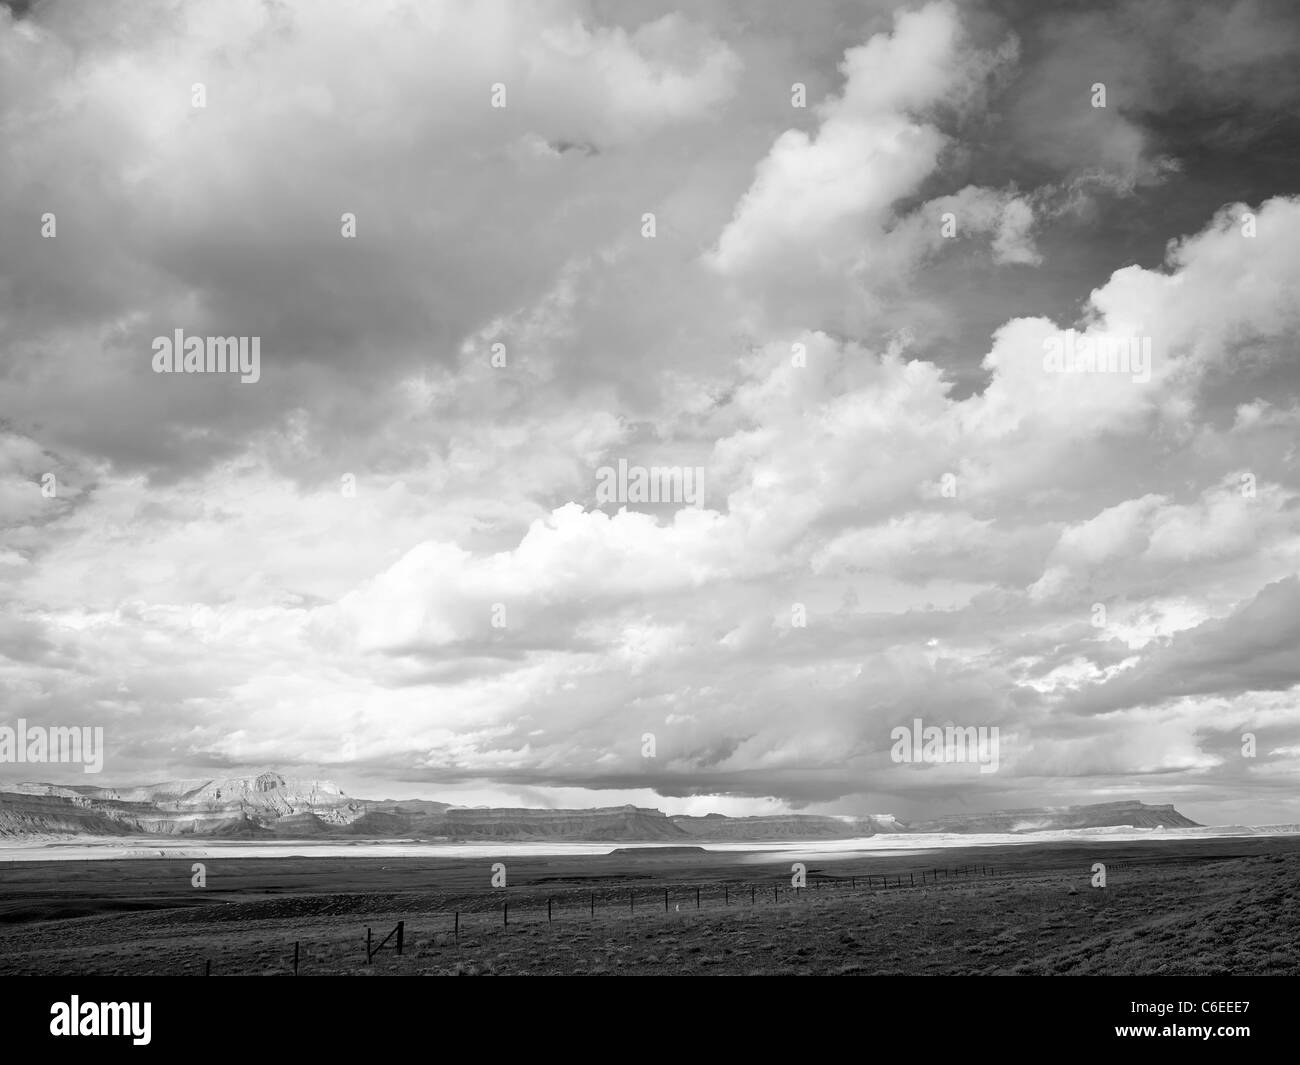 USA, Utah, Clouds over desert landscape Stock Photo - Alamy